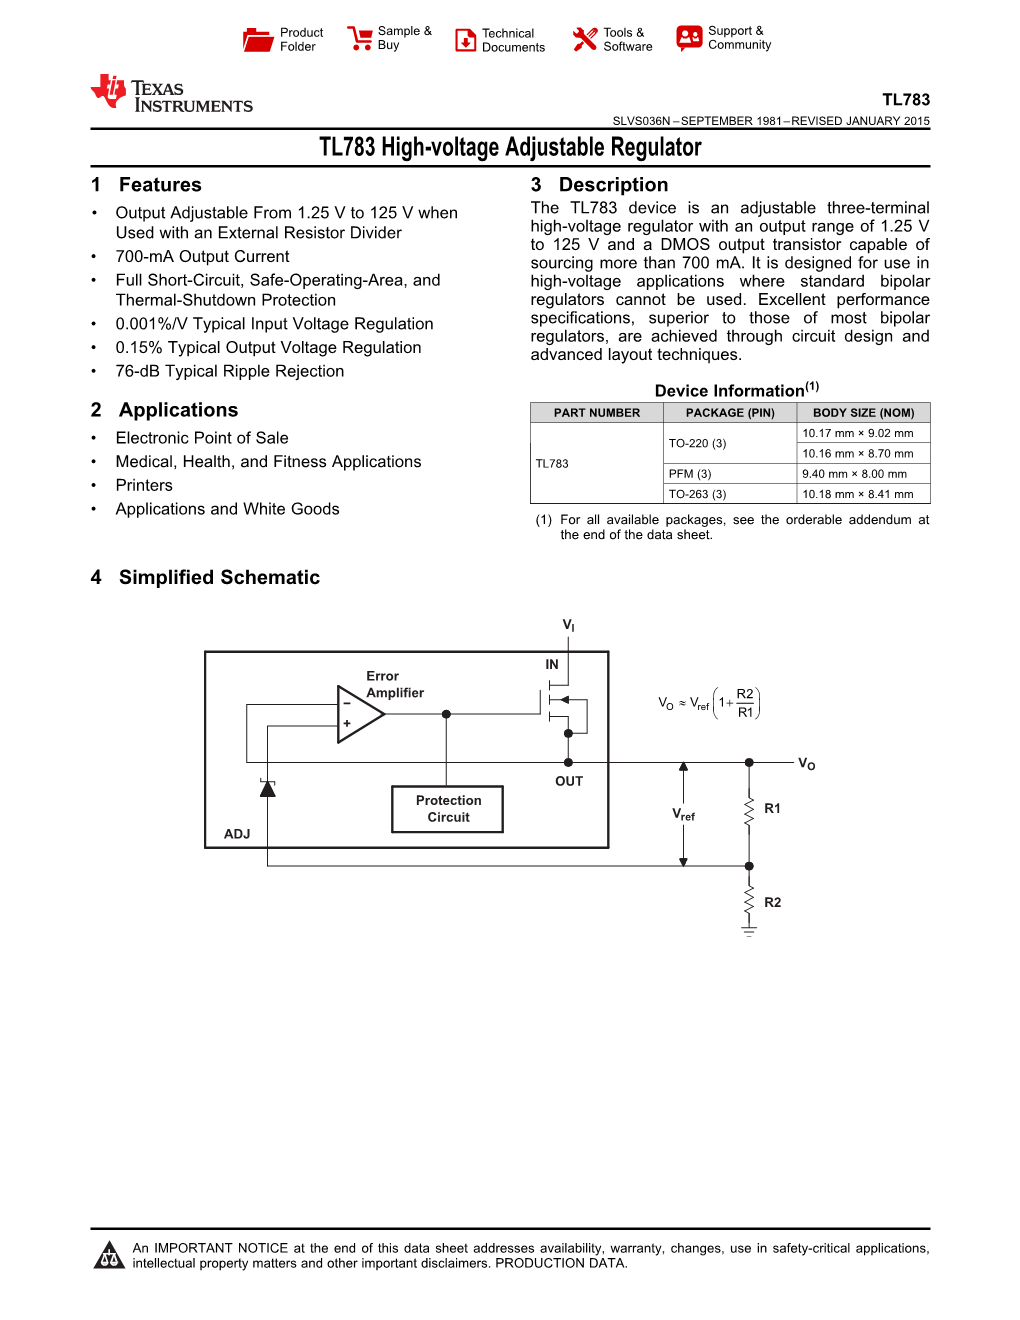 TL783 High-Voltage Adjustable Regulator Datasheet (Rev. N)